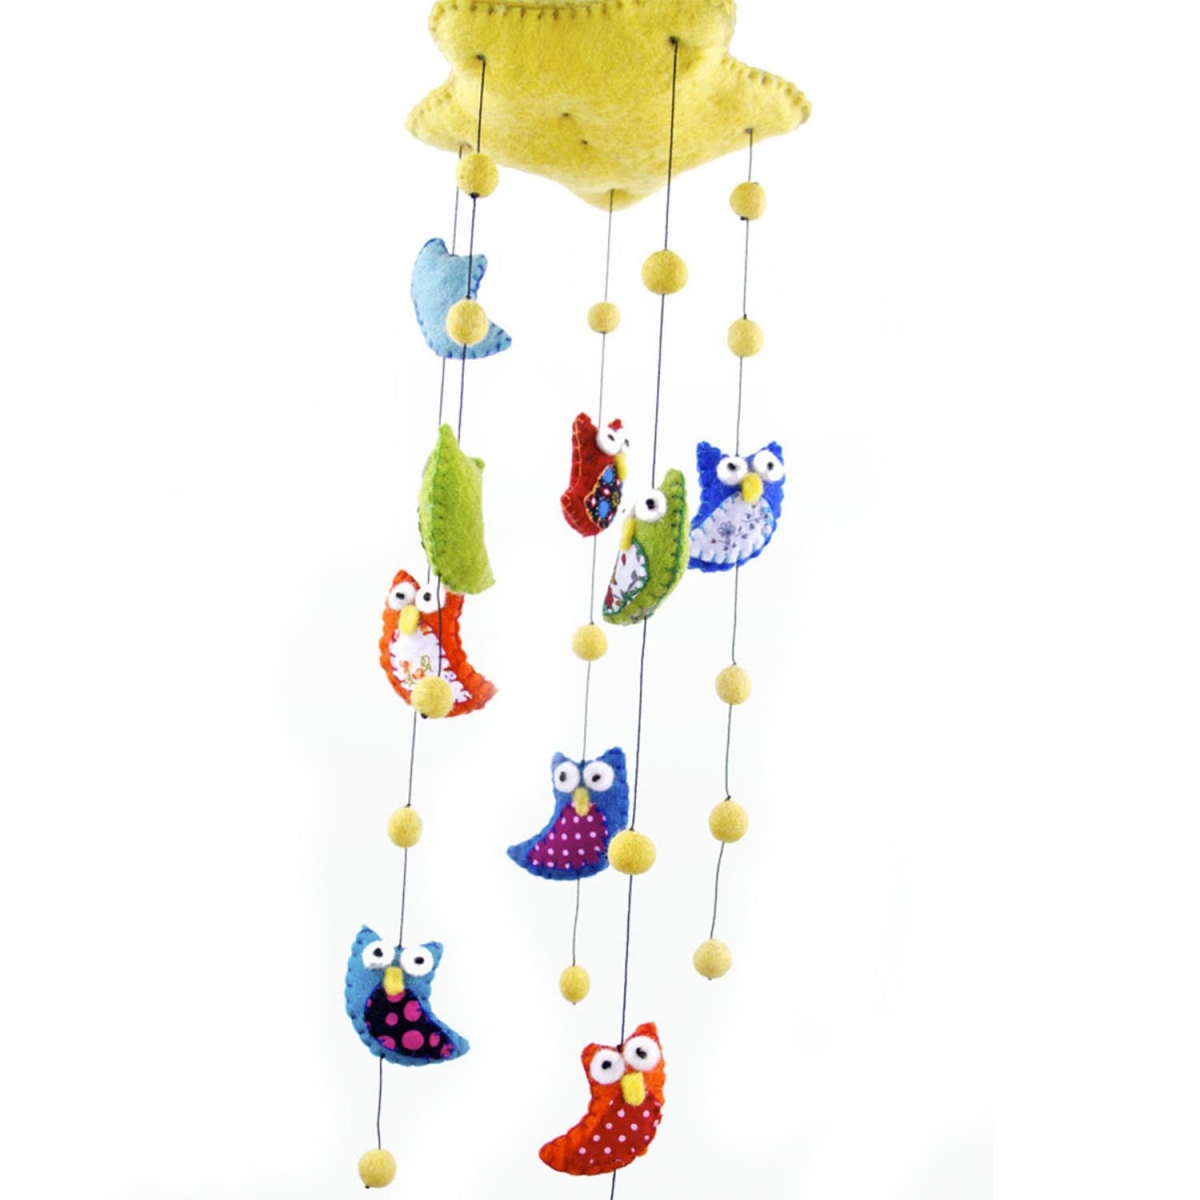 Glg2330-596020 Handmade & Fair Trade Felt Owl Mobile - Bright Colors